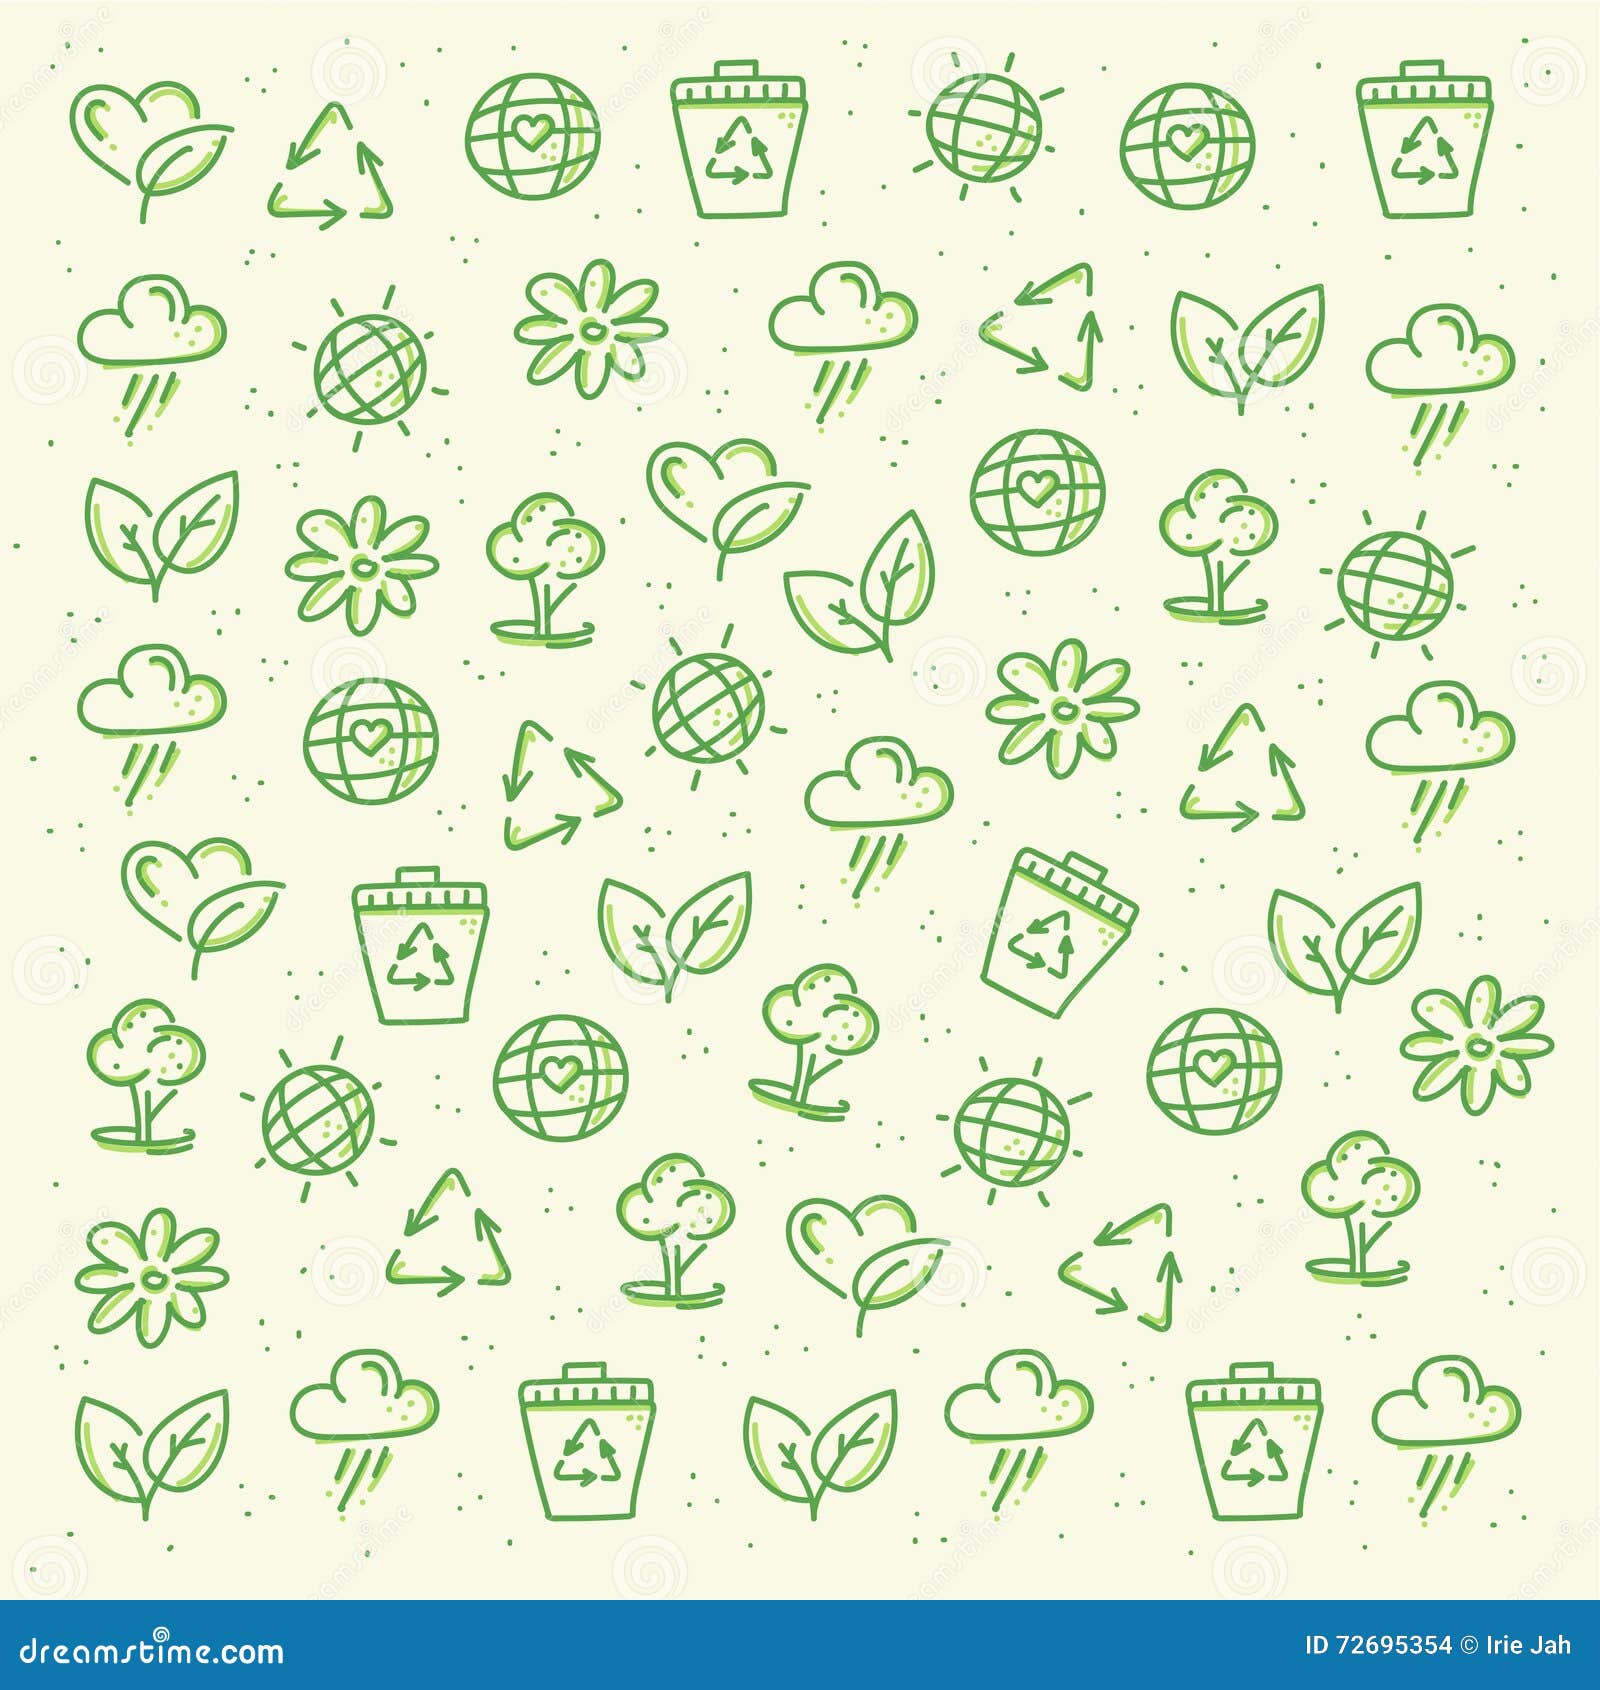 eco friendly pattern